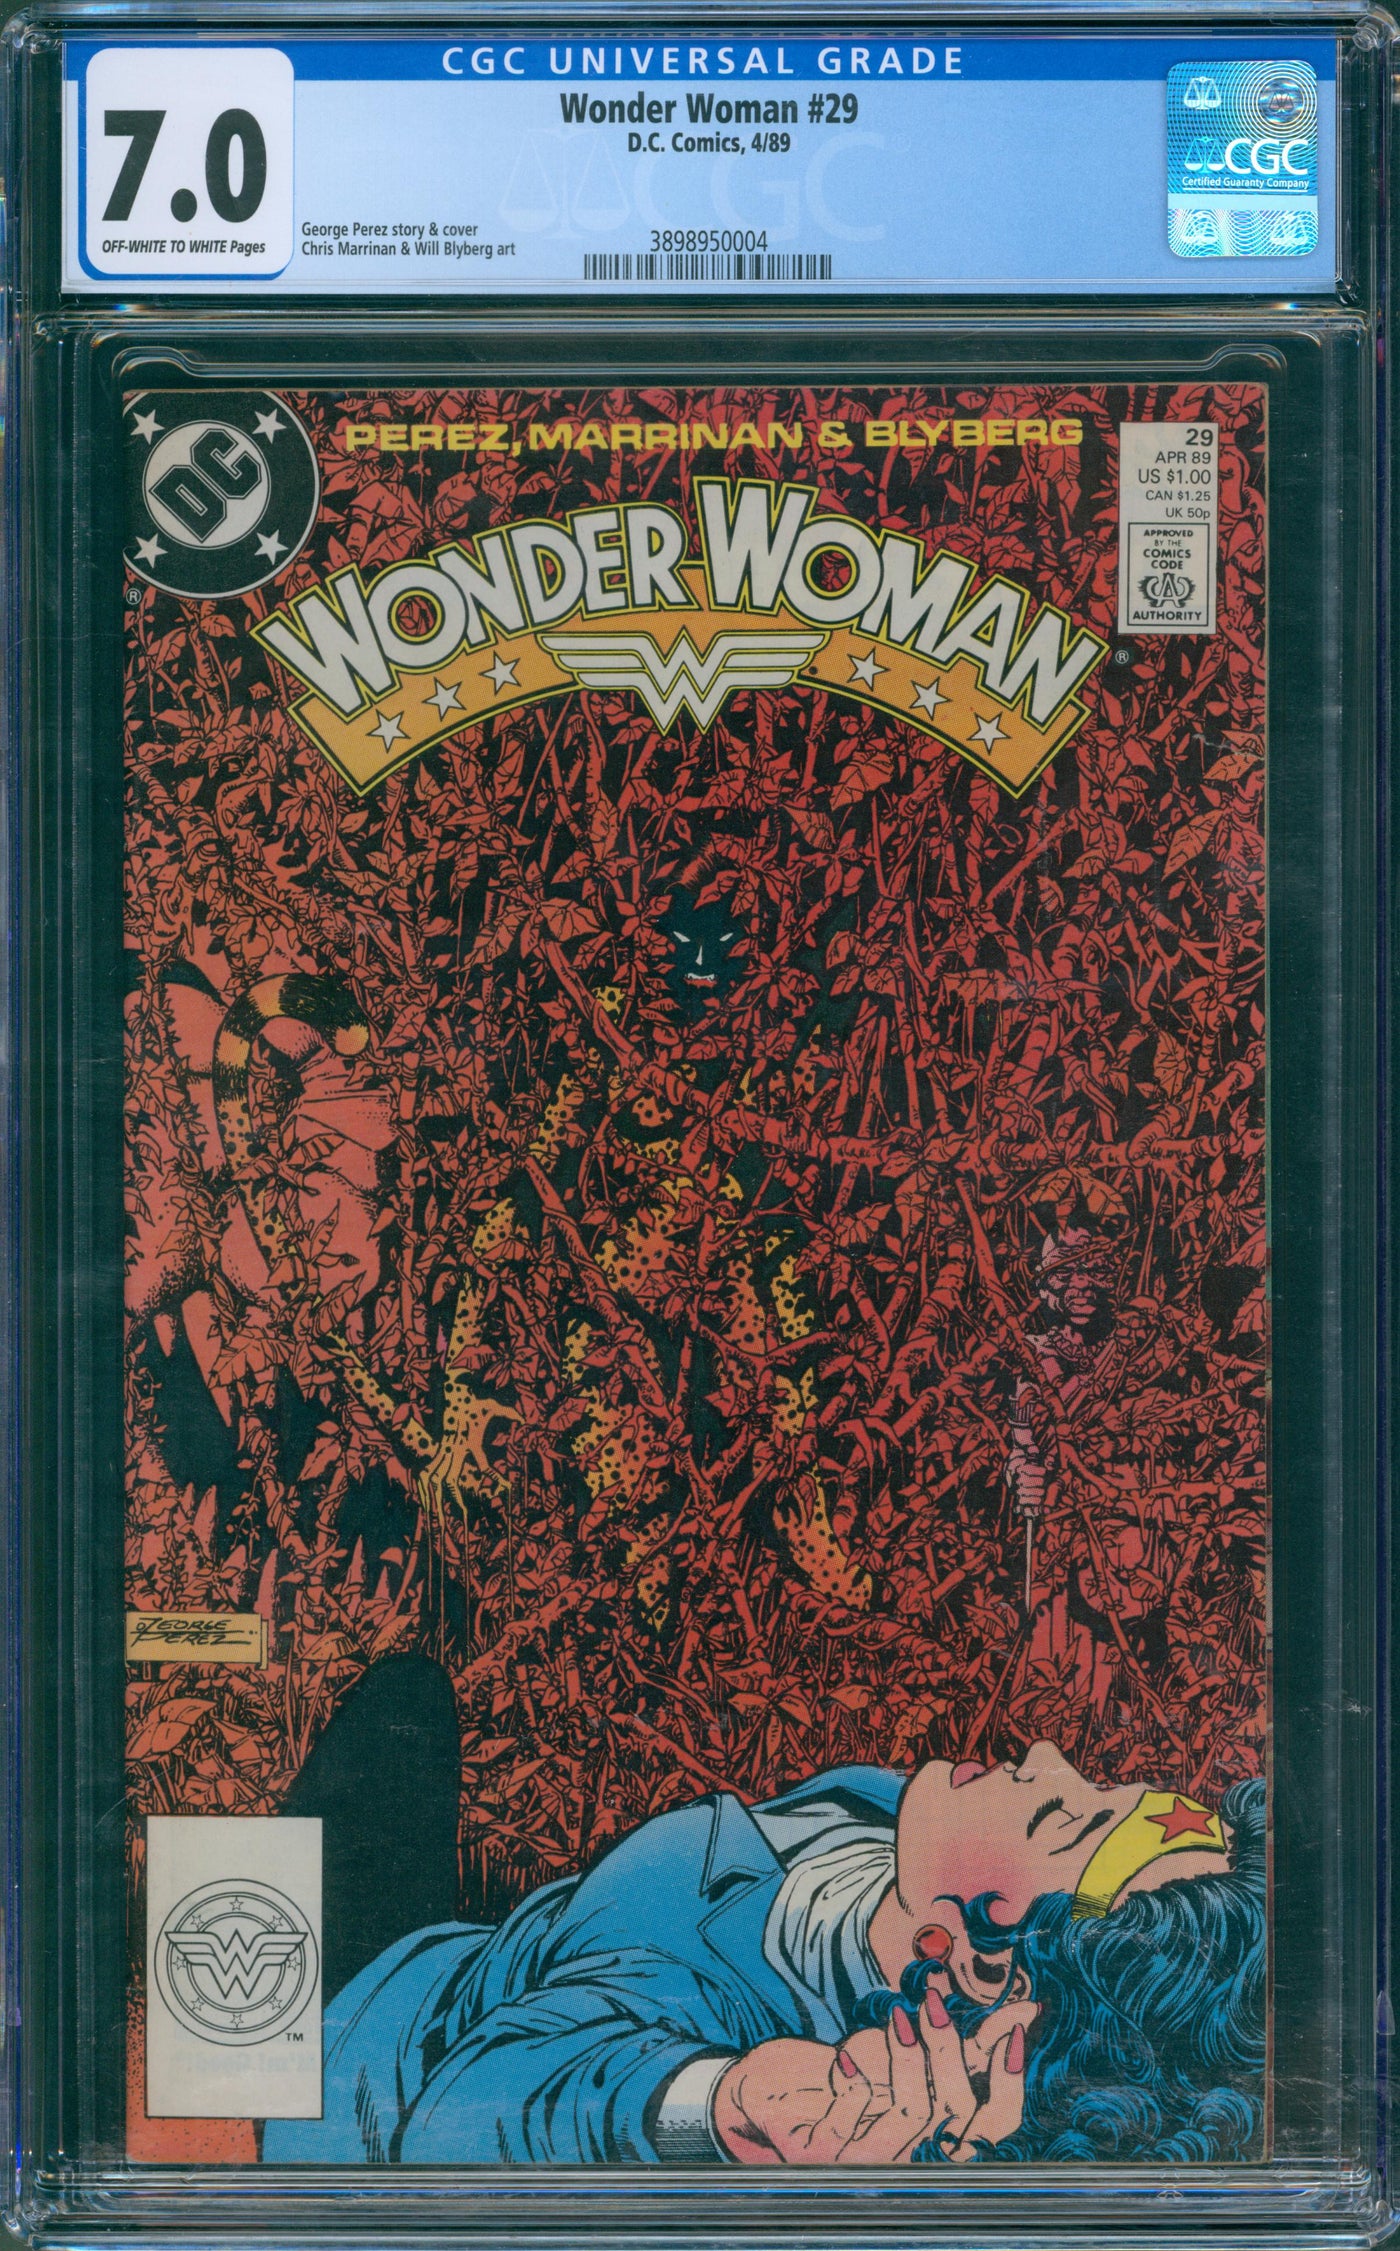 Wonder woman #29 CGC 7.0